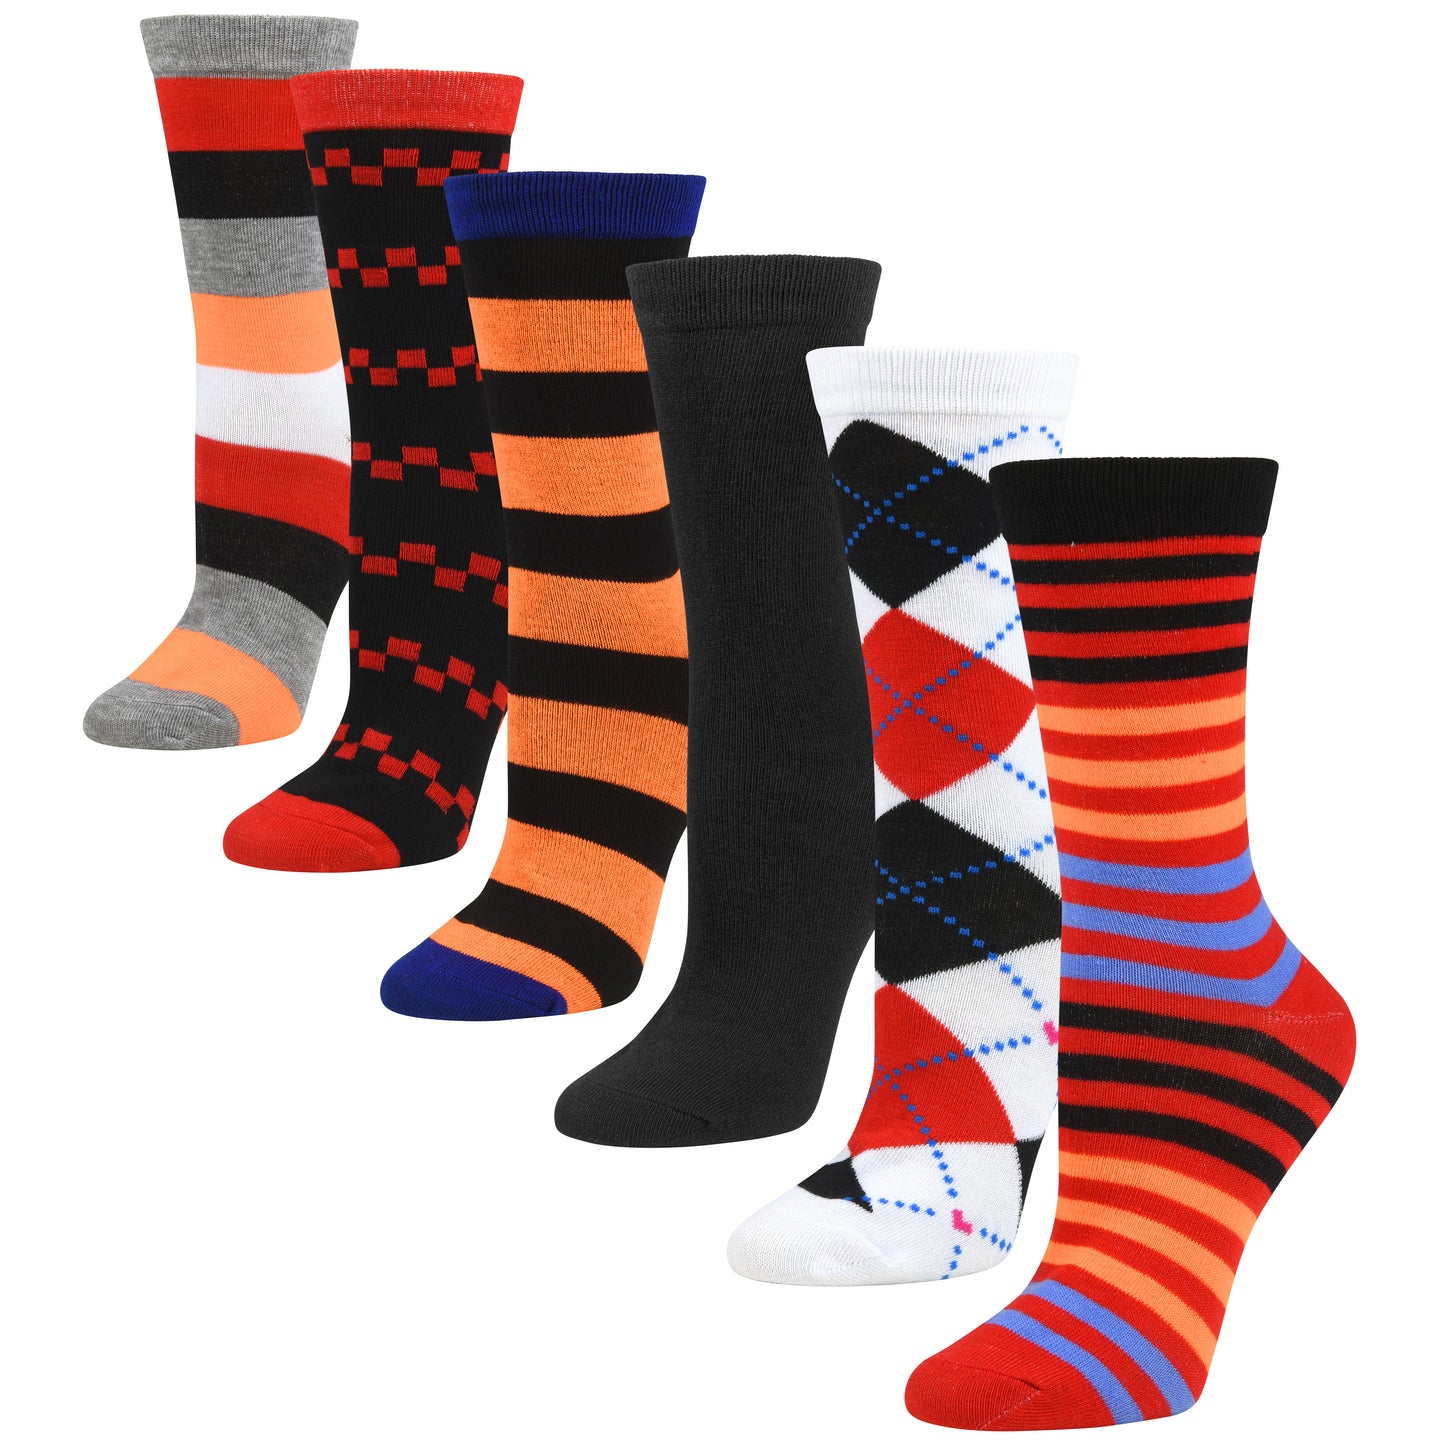 Womens Dress Socks - Colorful Crew 6/12 Pairs